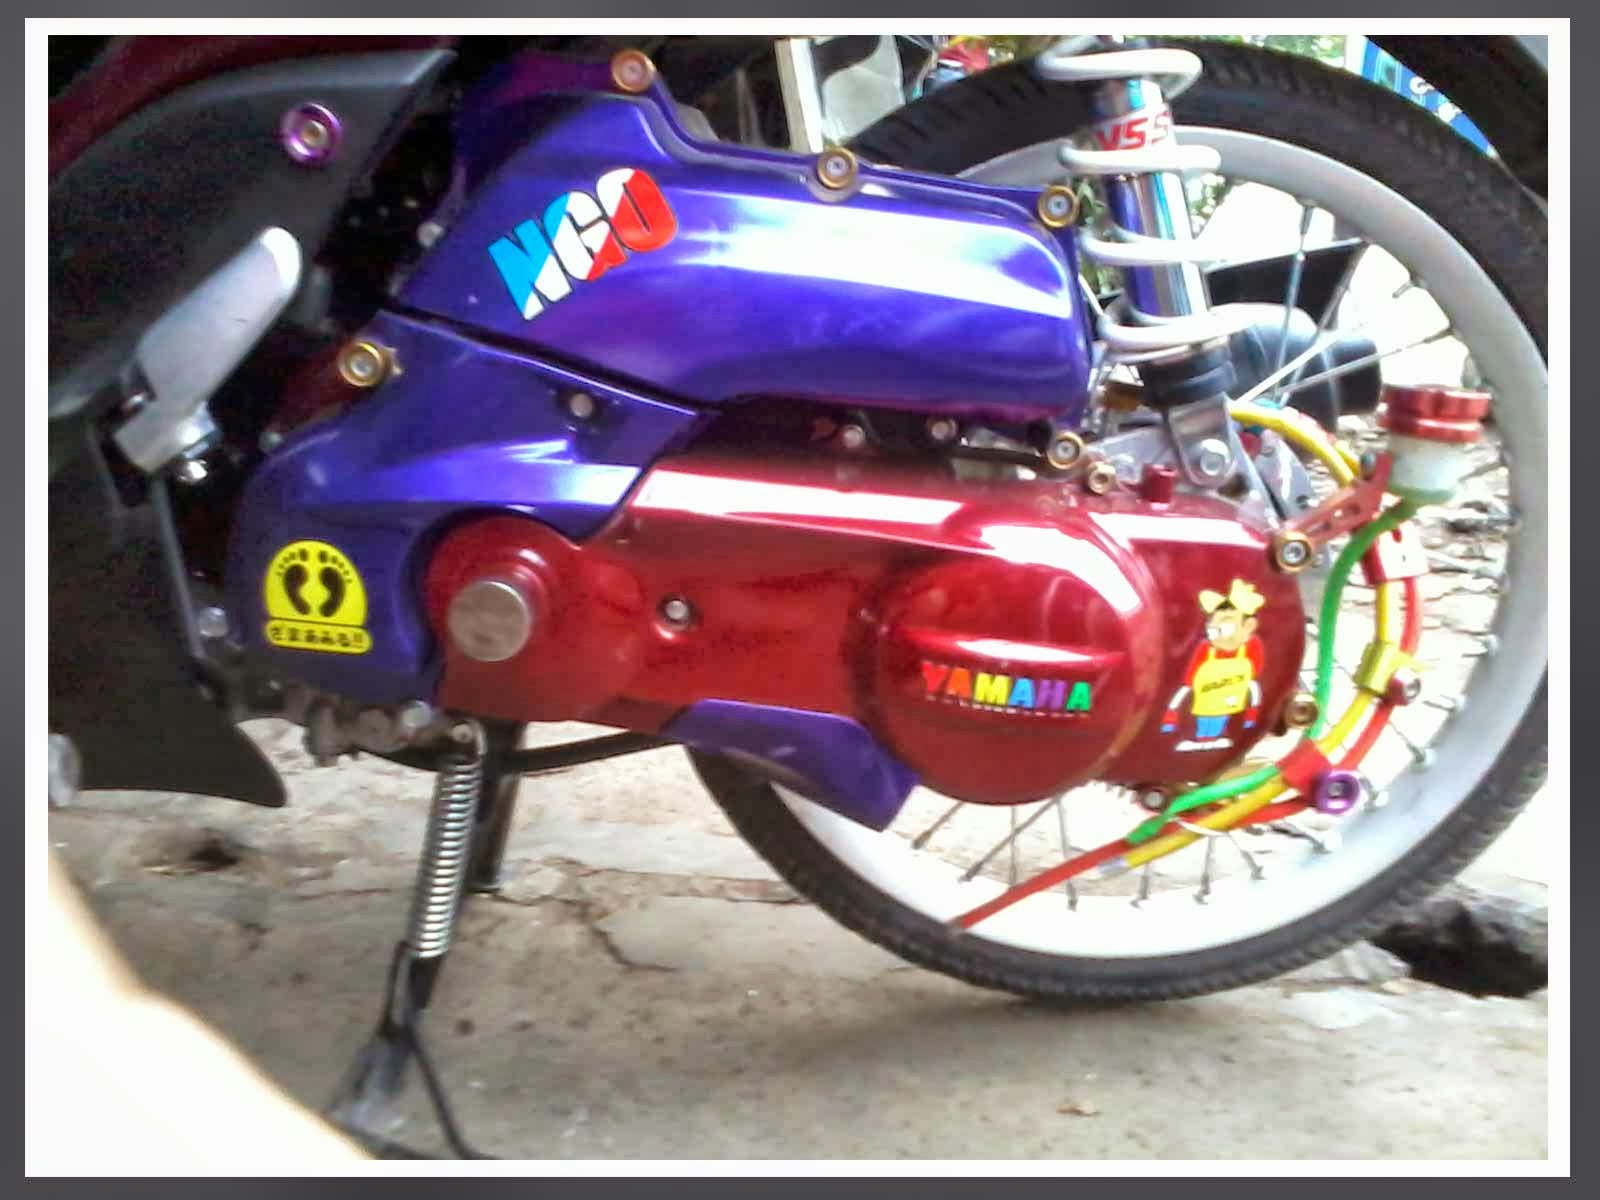 Kumpulan Foto Modifikasi Motor Thailand Terlengkap Modispik Motor